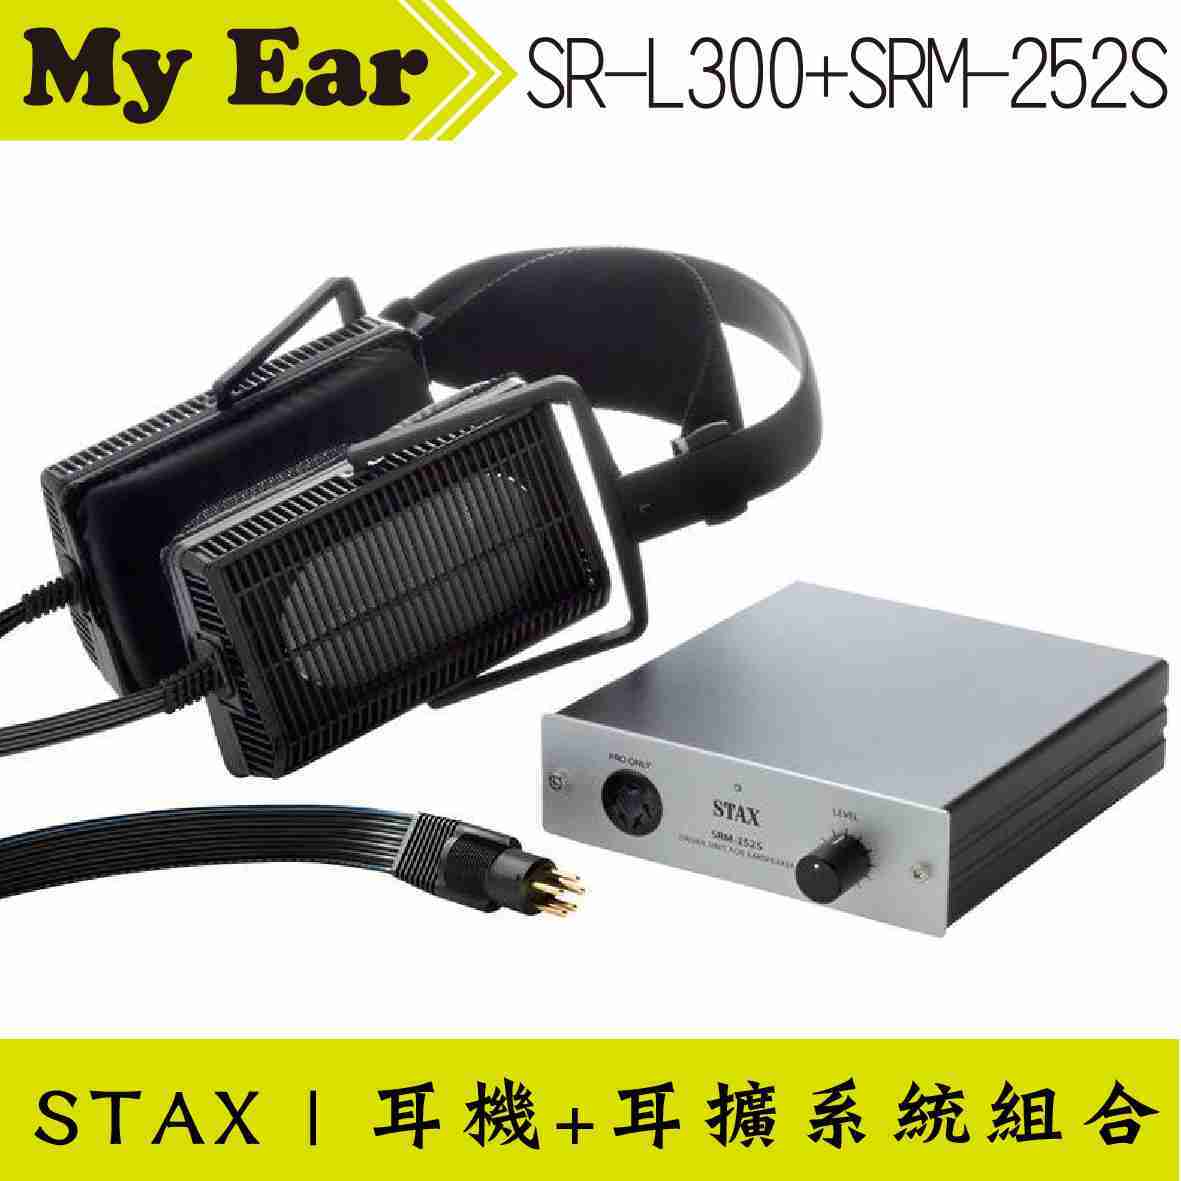 Stax SR-L300+SRM-252S 靜電耳機+耳擴系統組合 | My Ear 耳機專門店